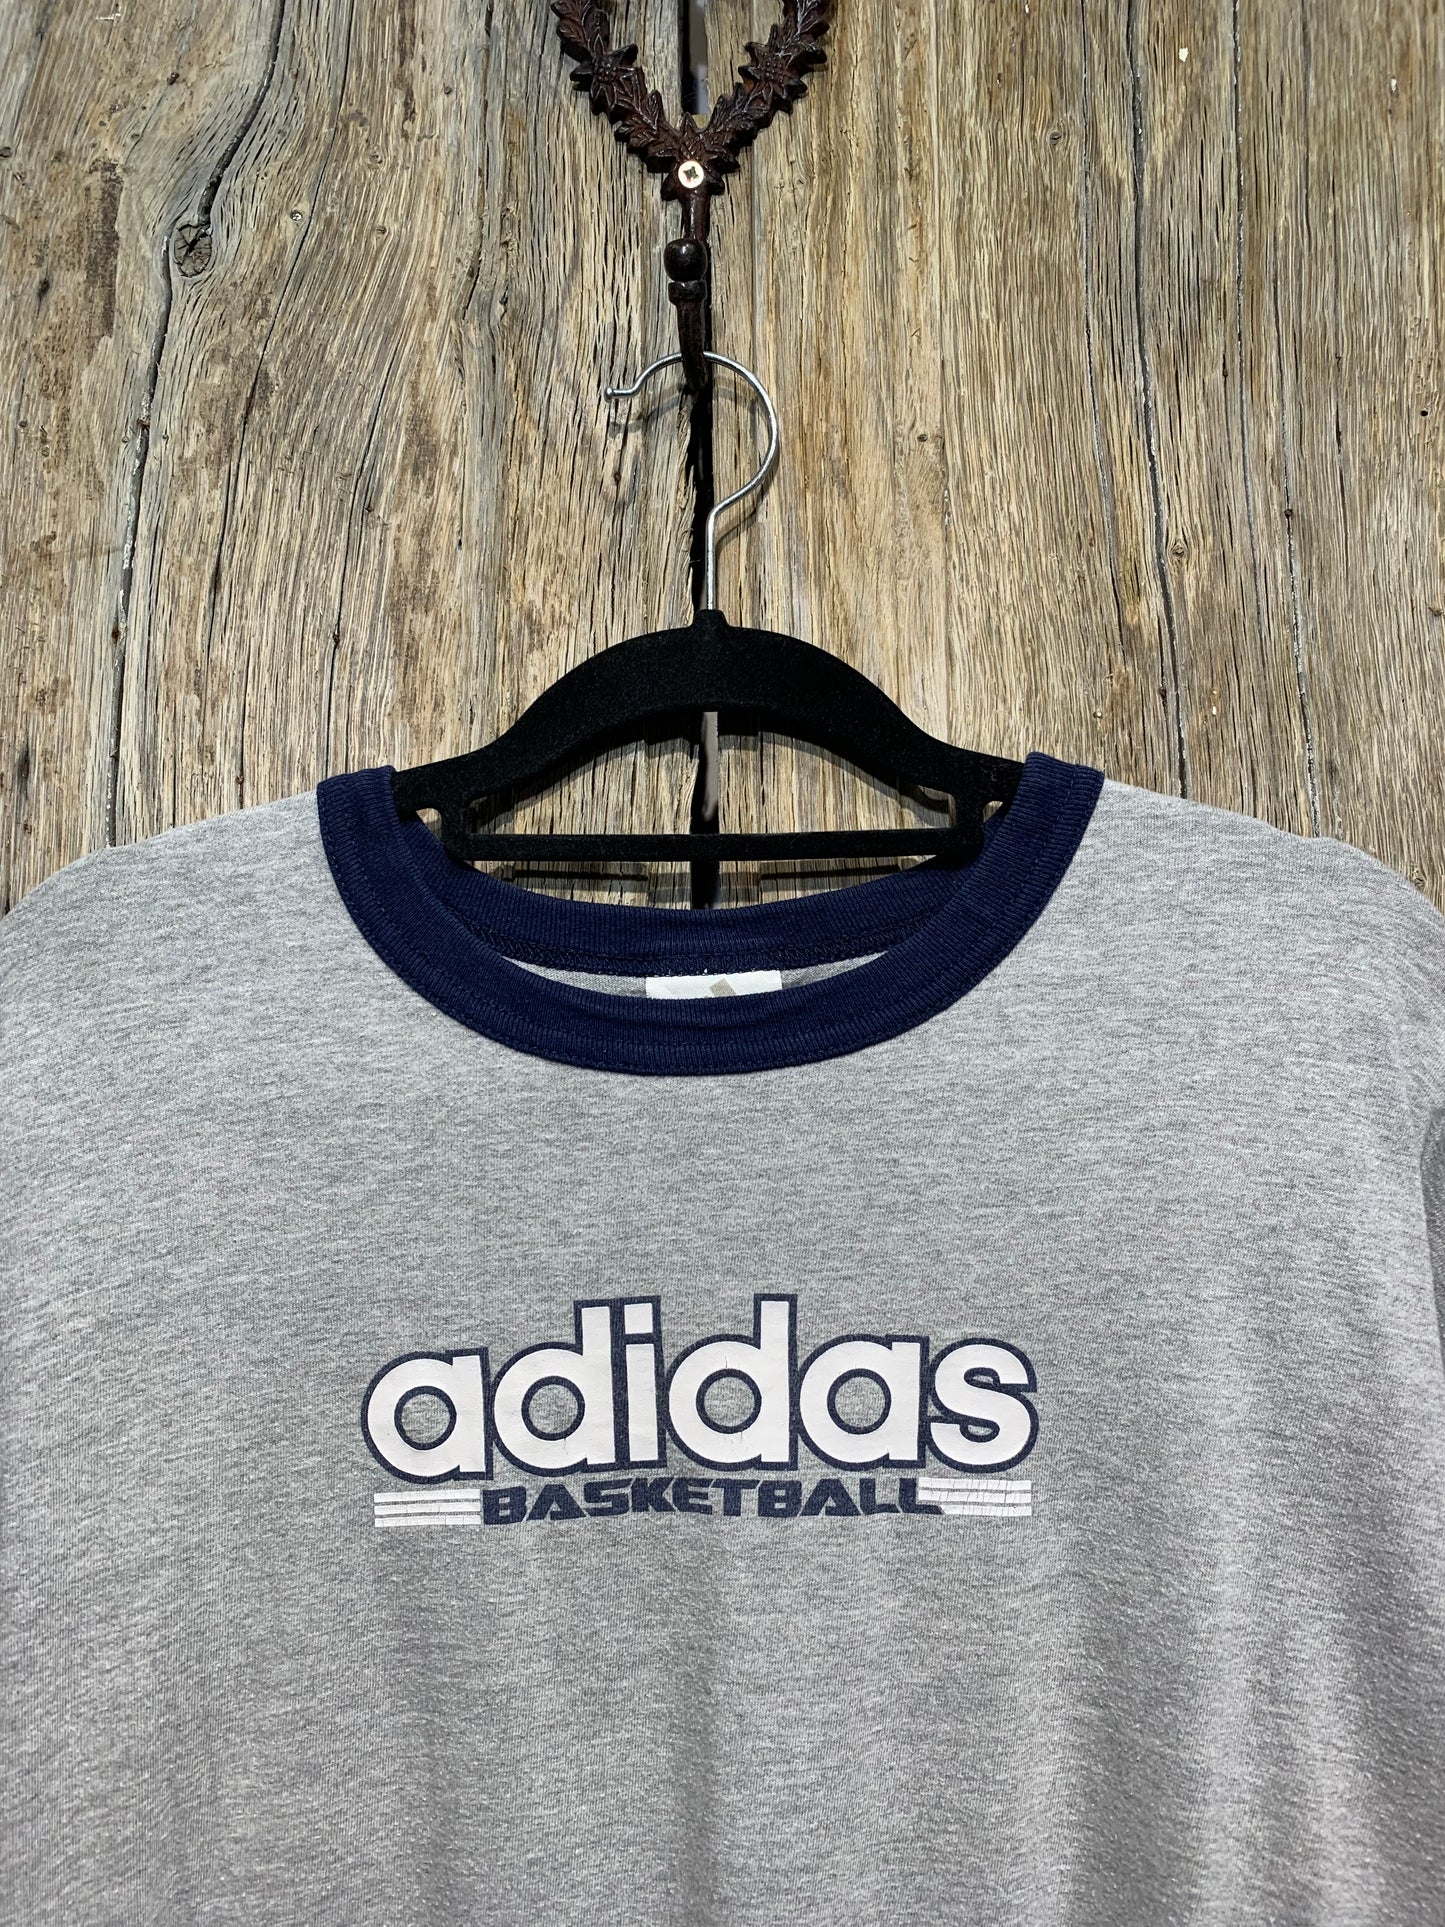 Grey Adidas Basketball Longsleeve